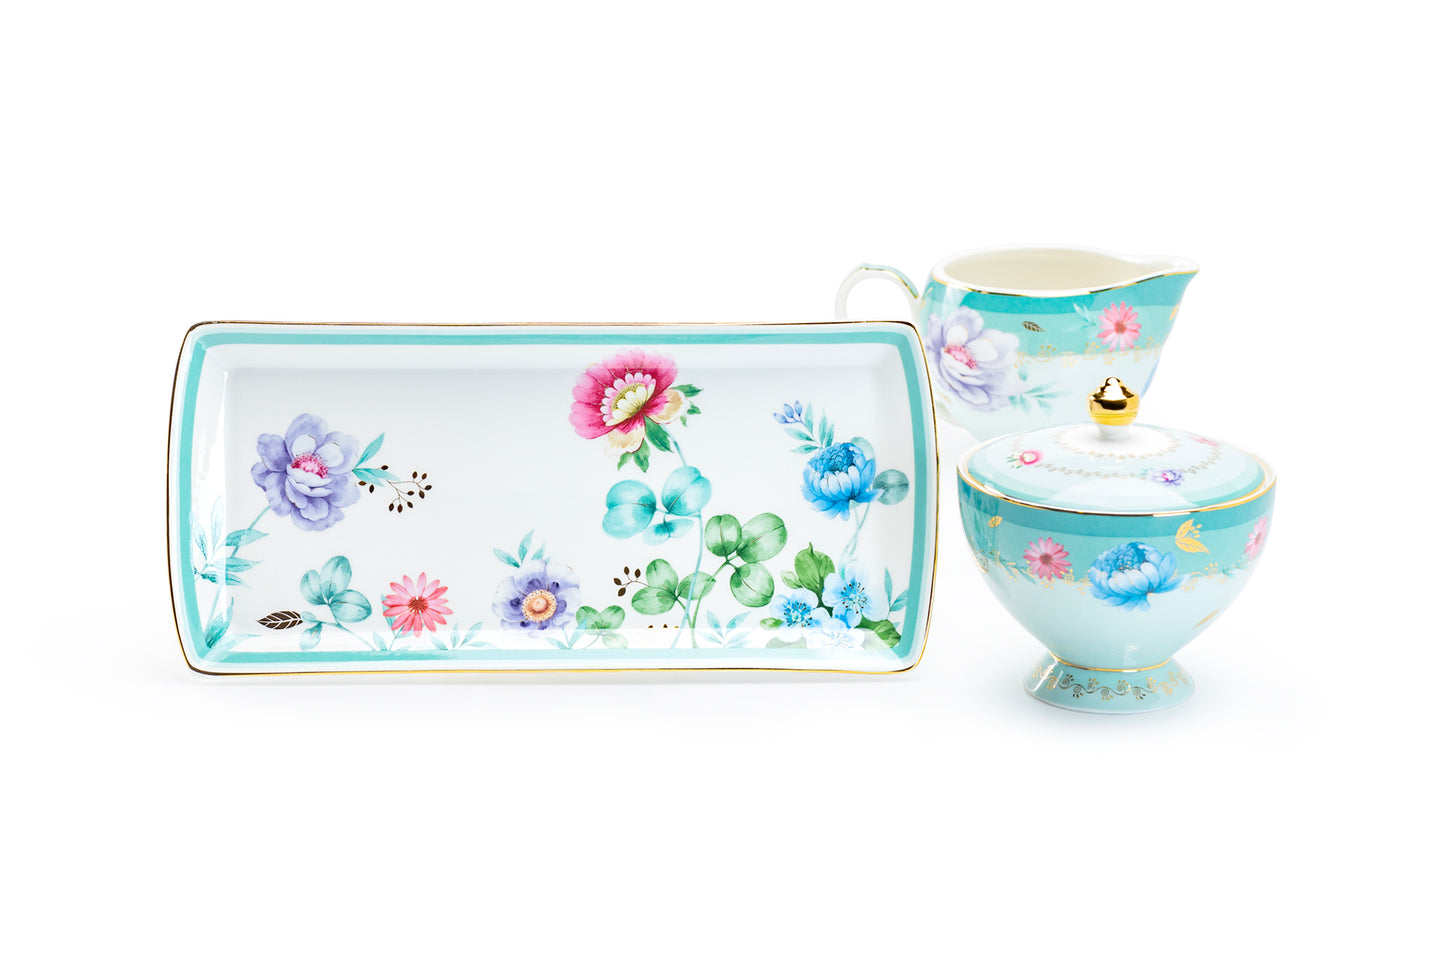 Mint Flower Garden Fine Porcelain Sugar Creamer & Serving Tray Set